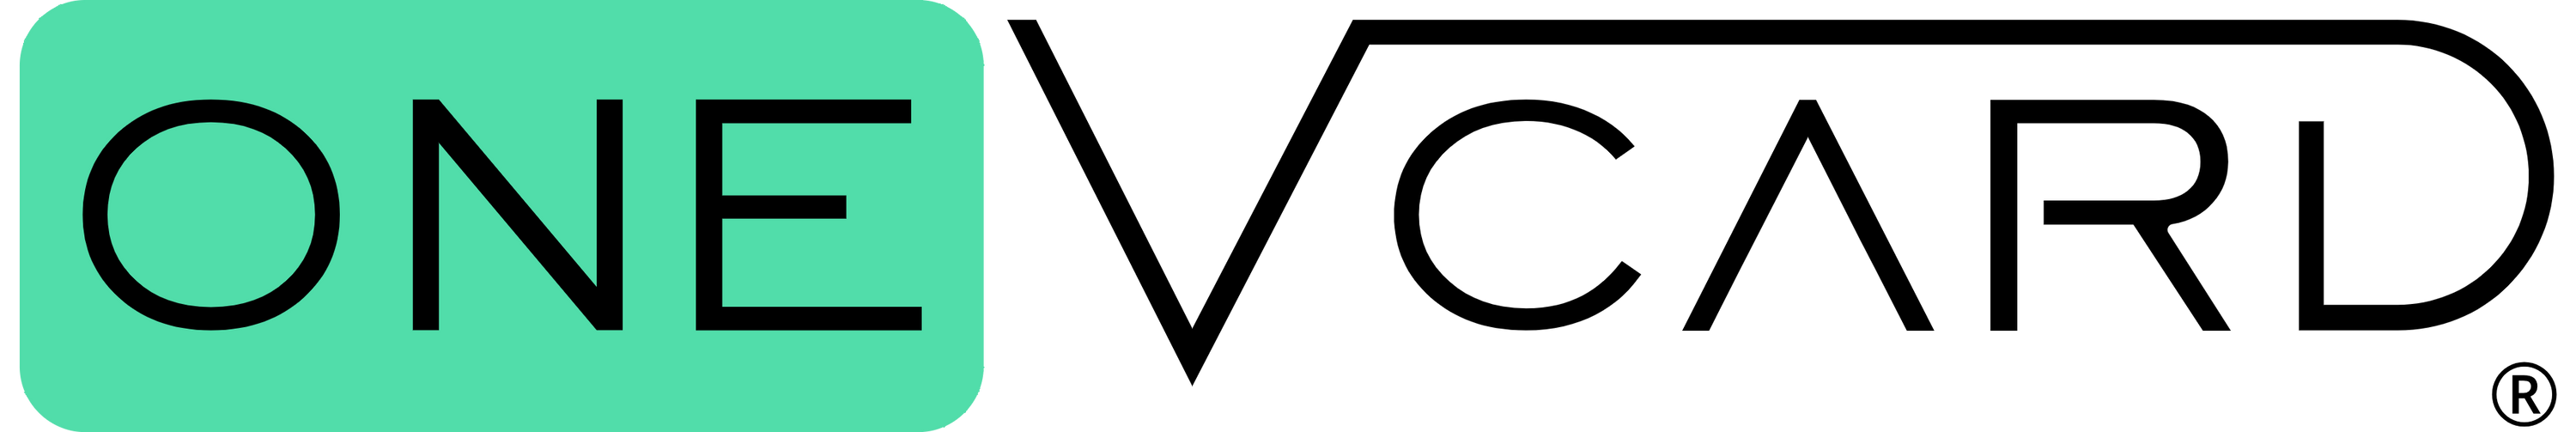 onevcard-logo